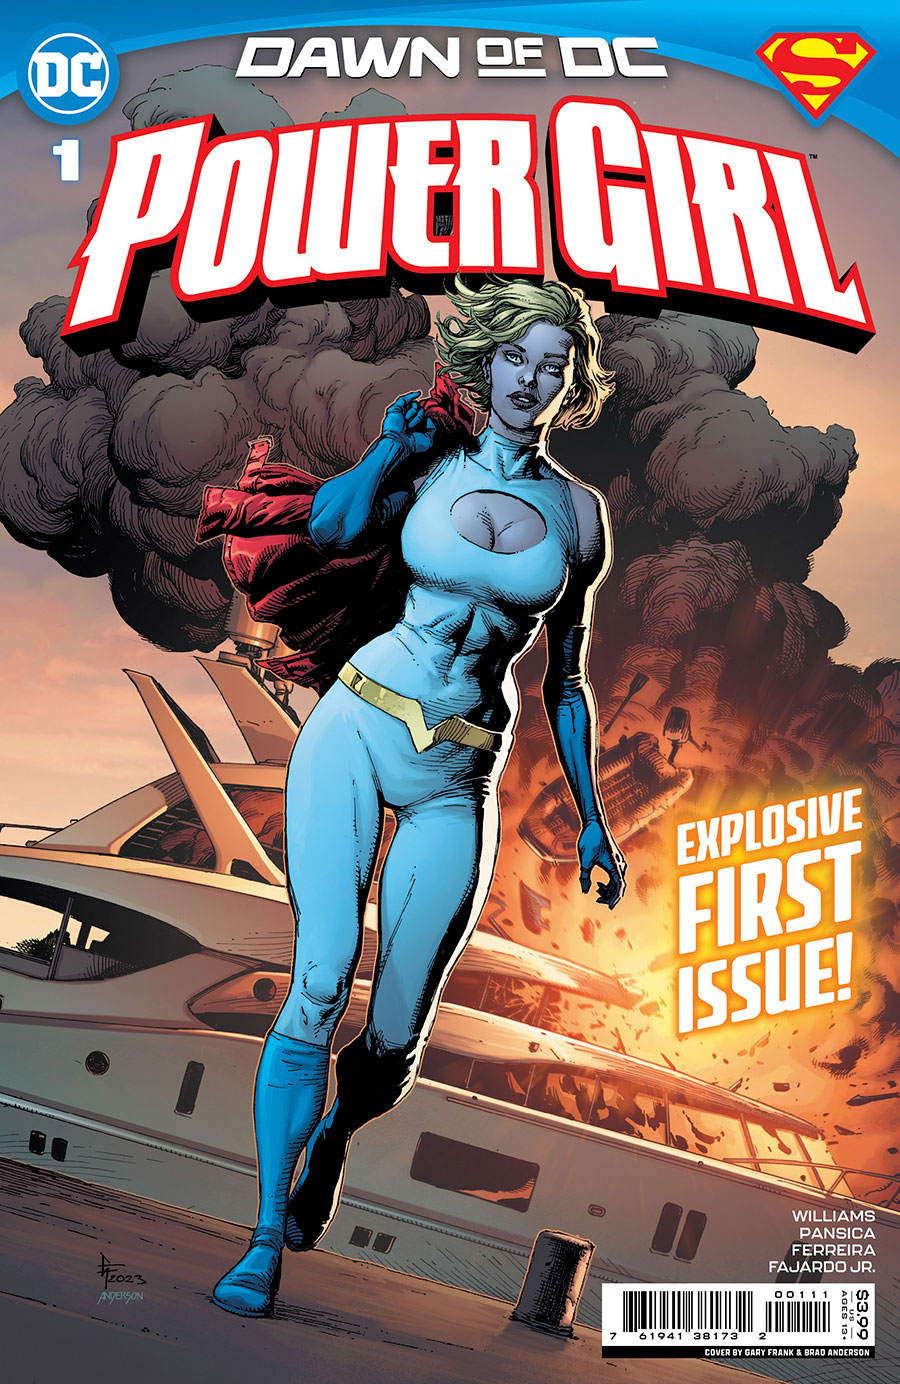 Power Girl Vol 3 #1 Cover A Regular Gary Frank Cover